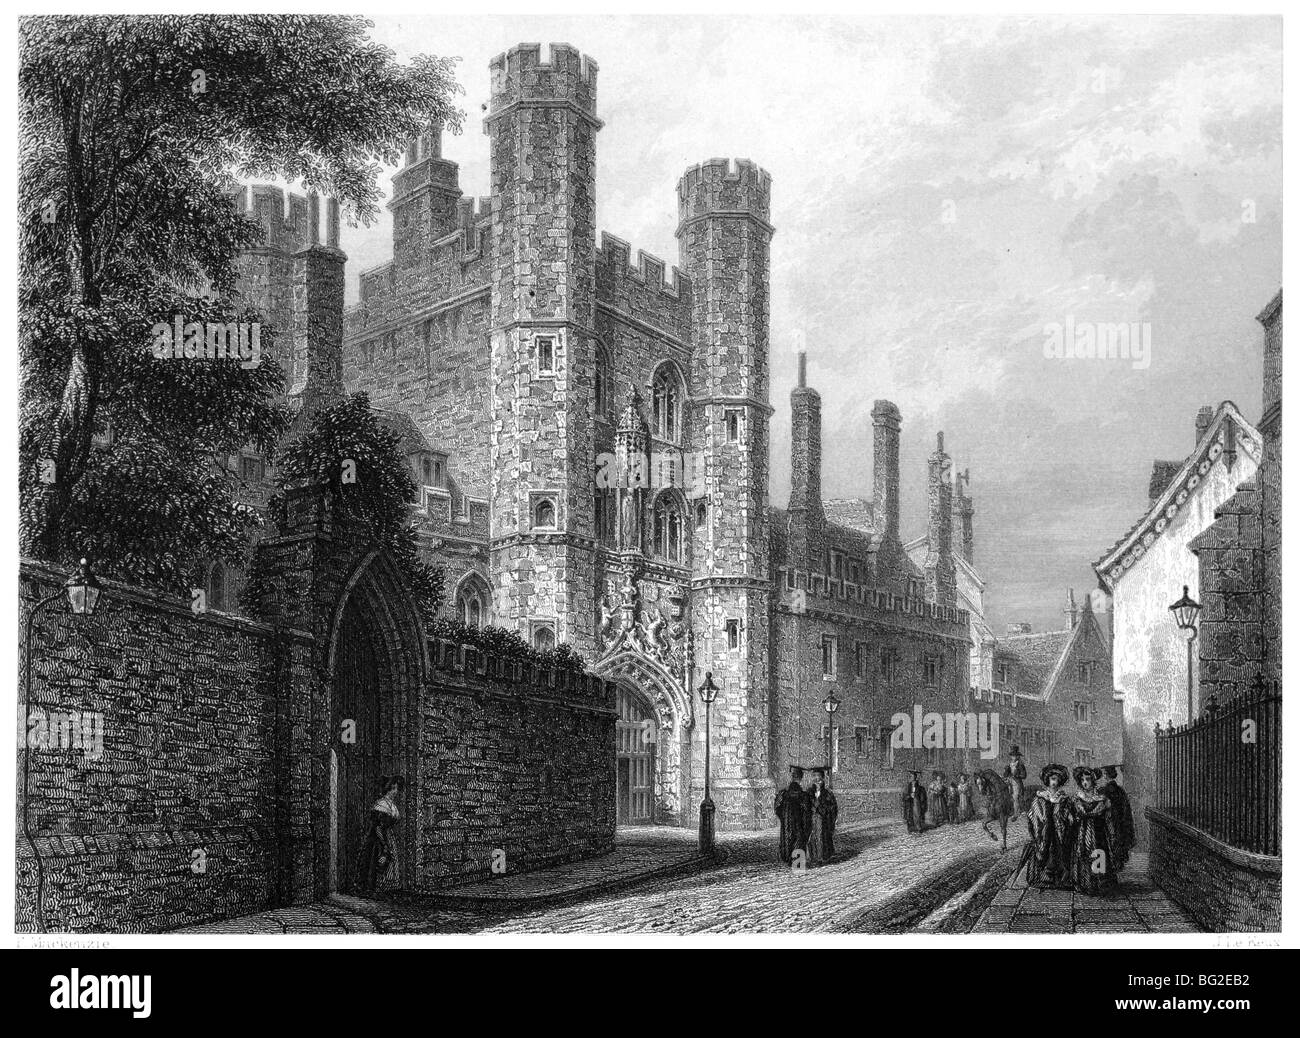 St John's College, Cambridge - entrada gatehouse Foto de stock